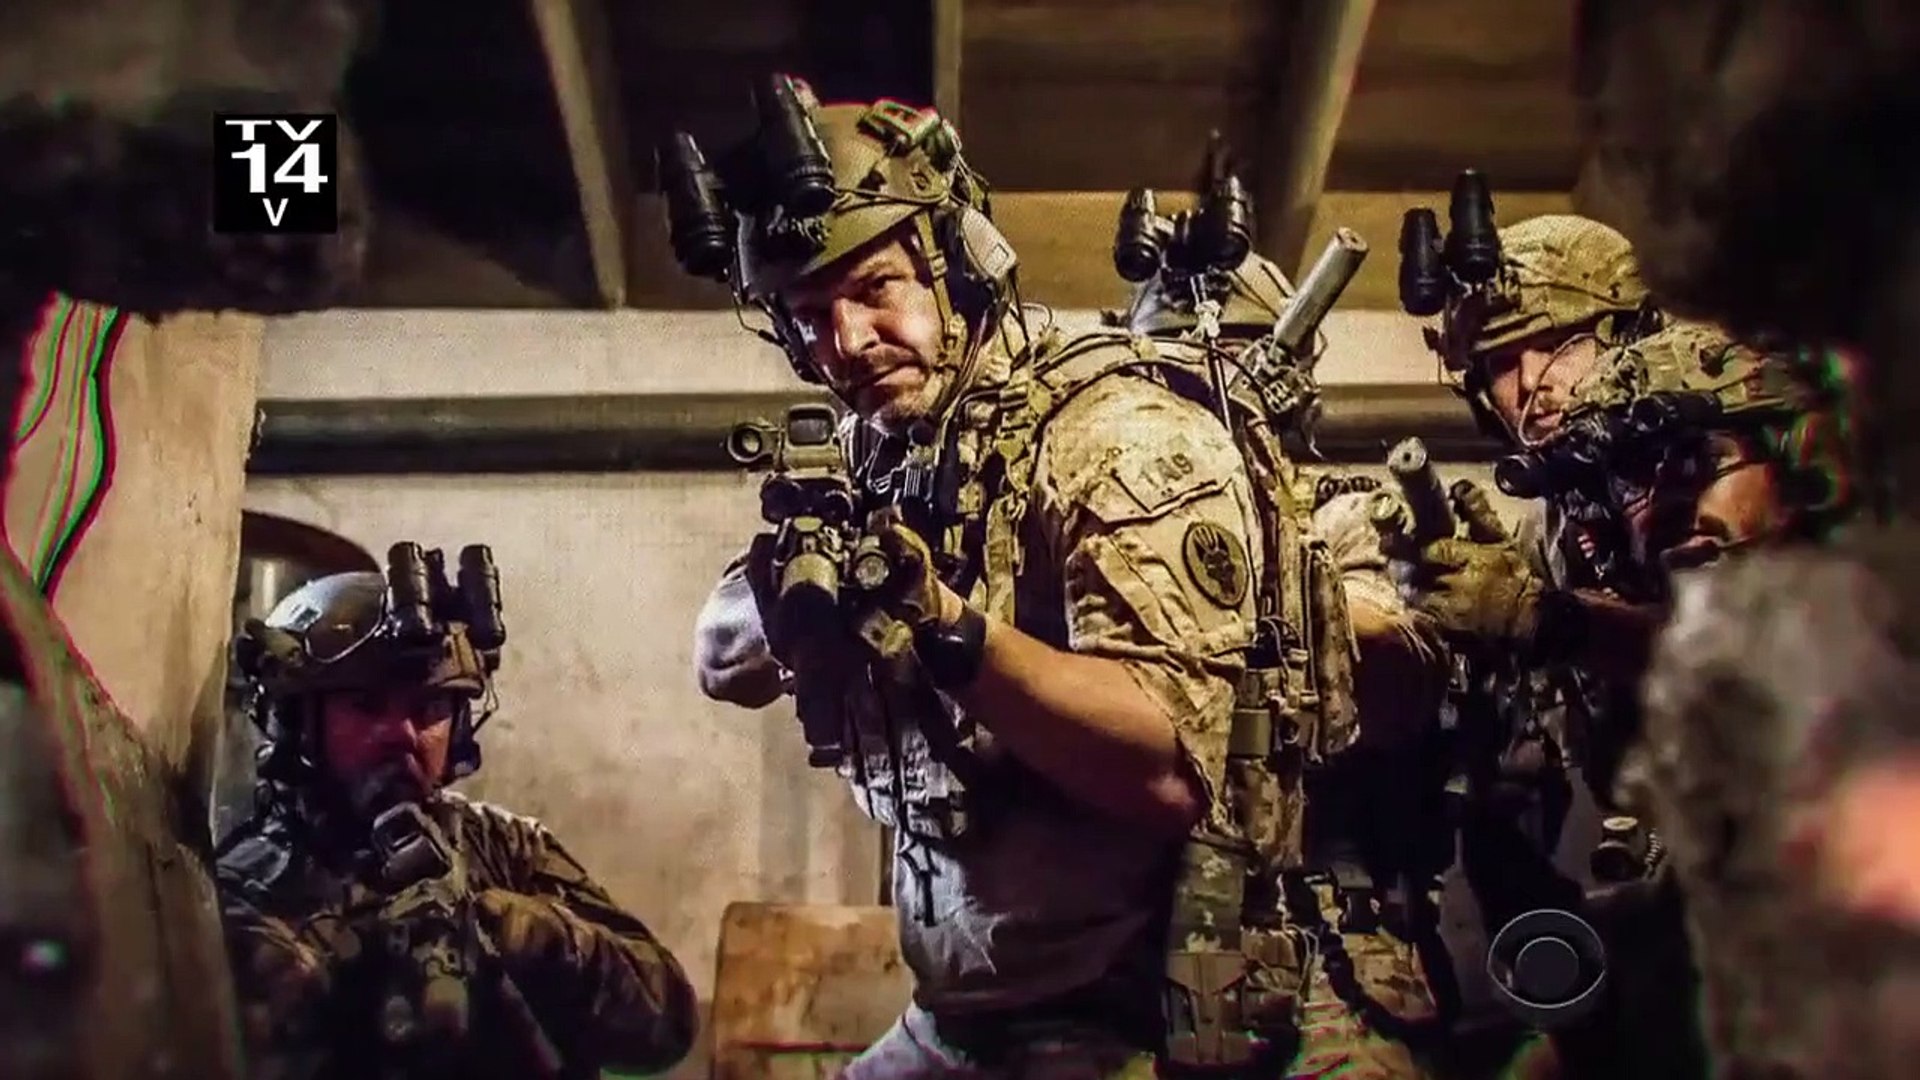 SEAL Team, Official Trailer